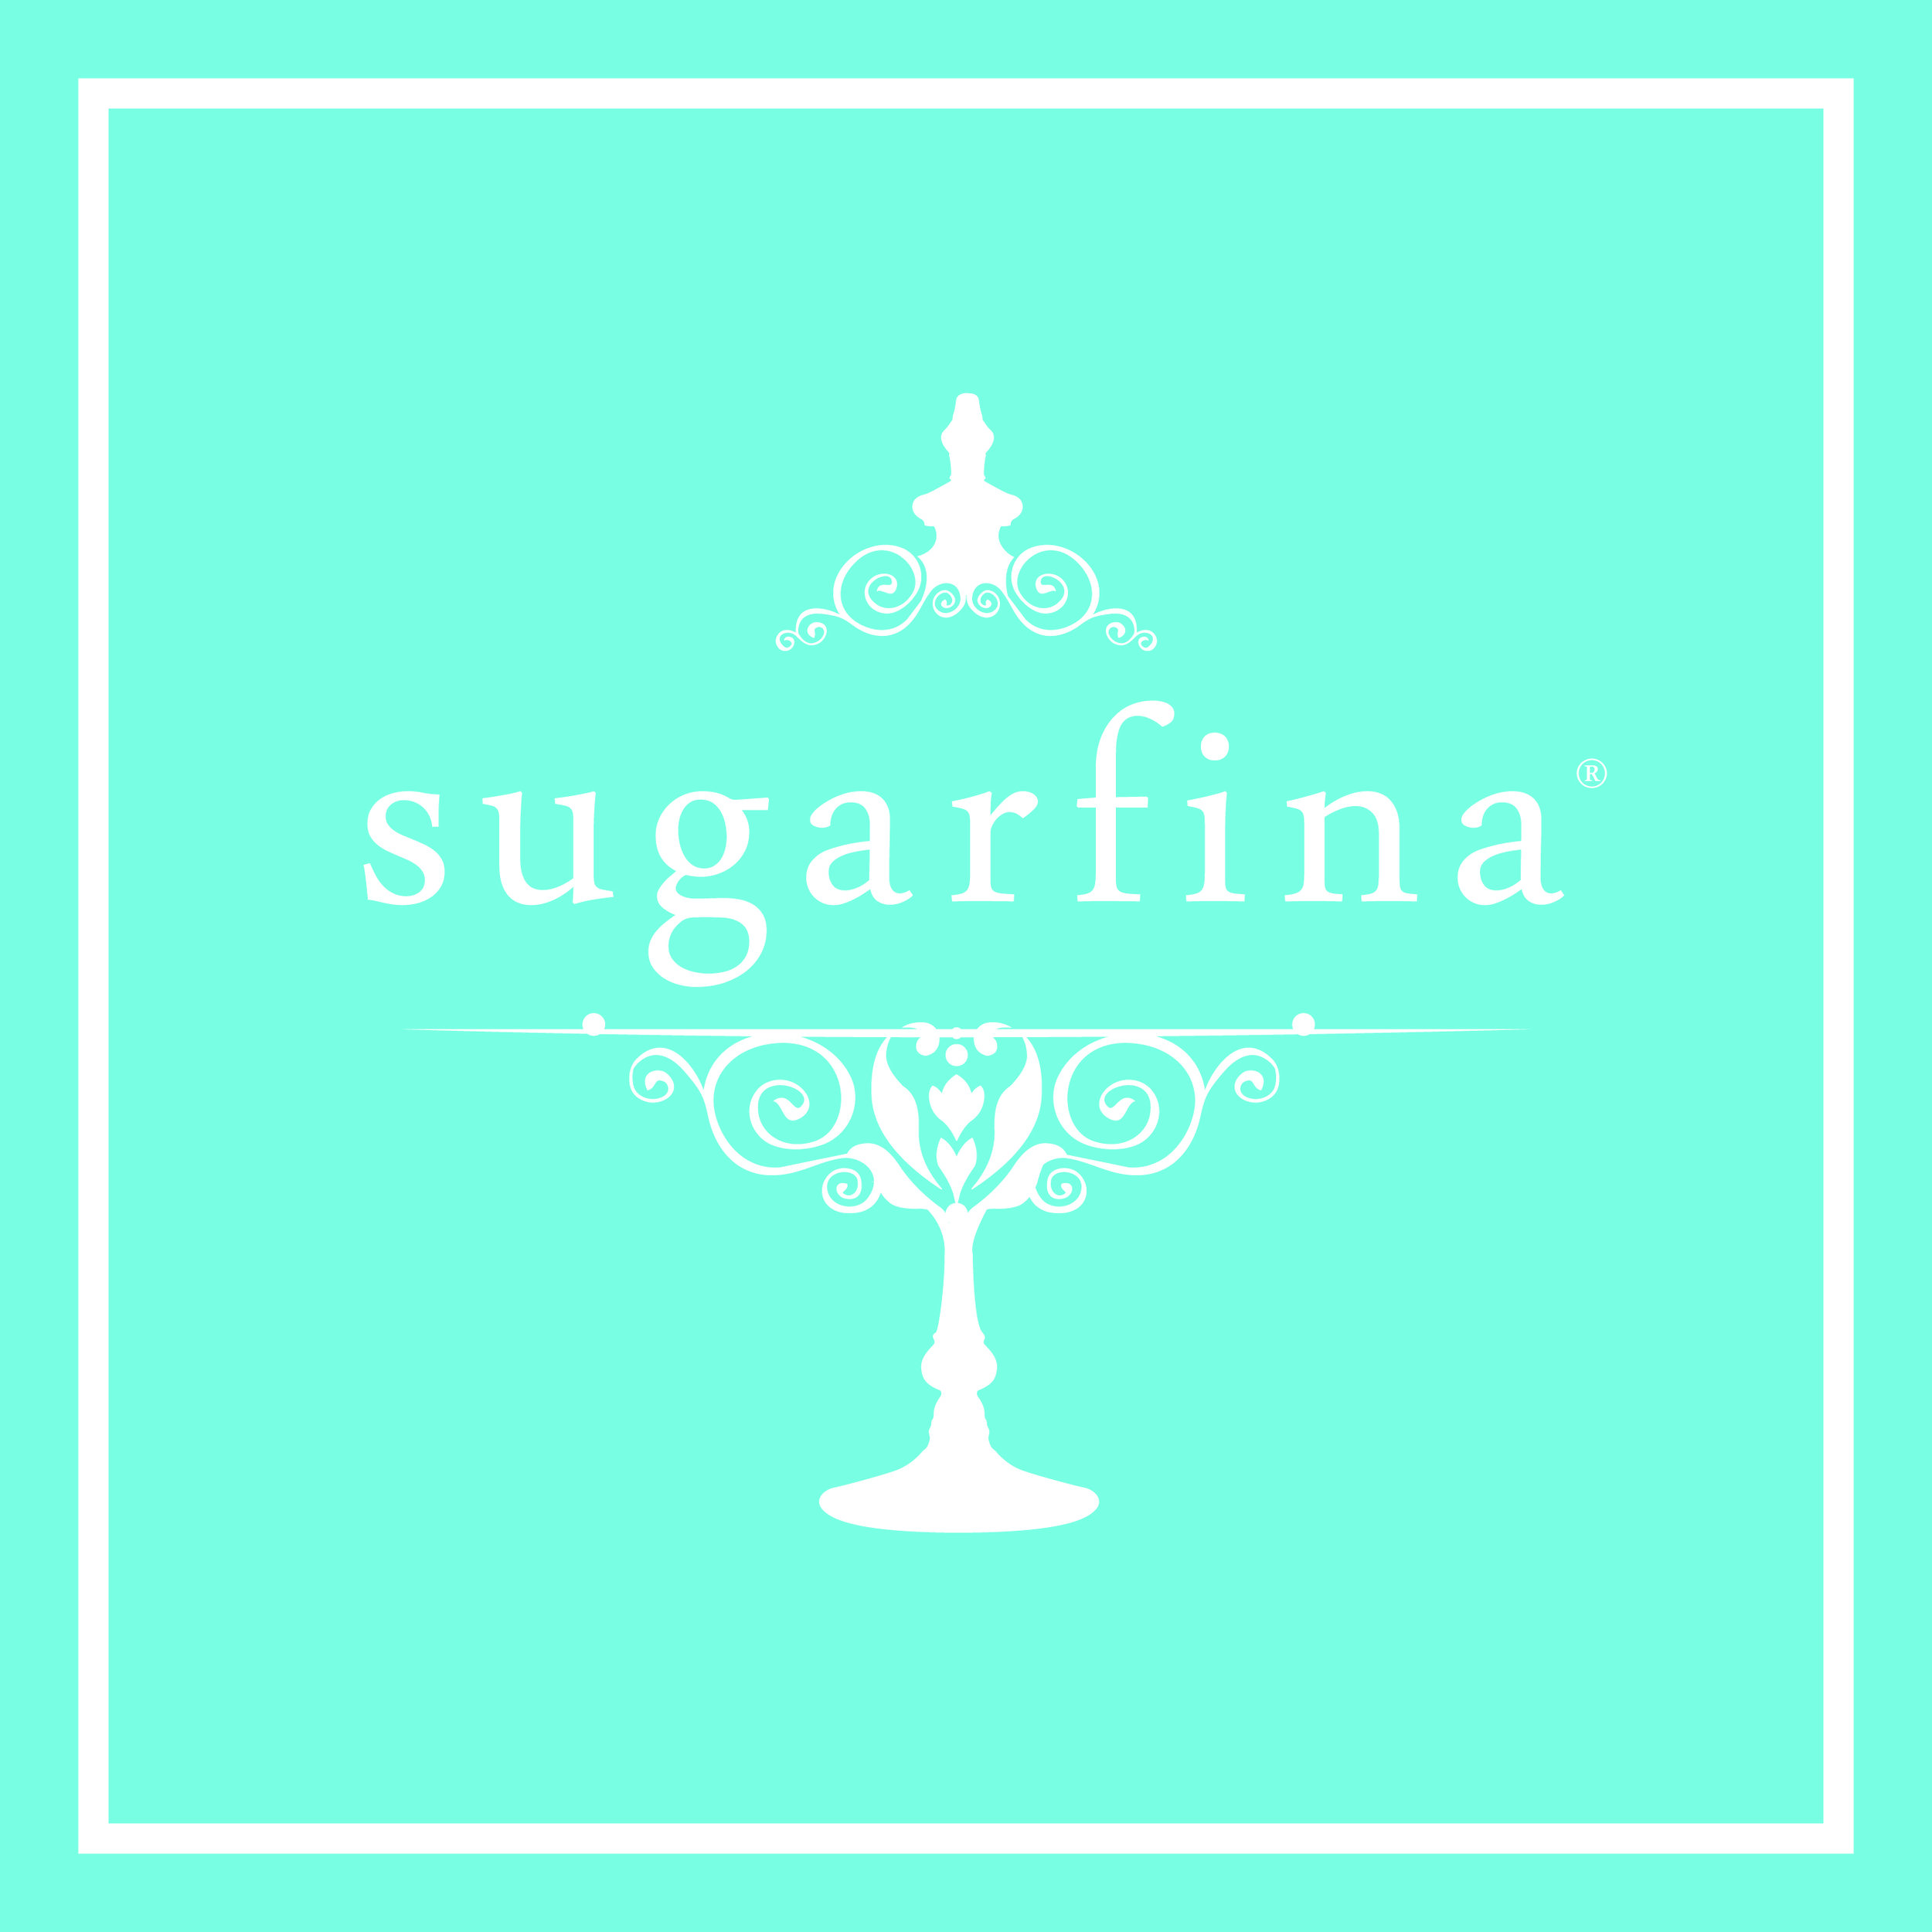 Sugarfina_square logo.jpg